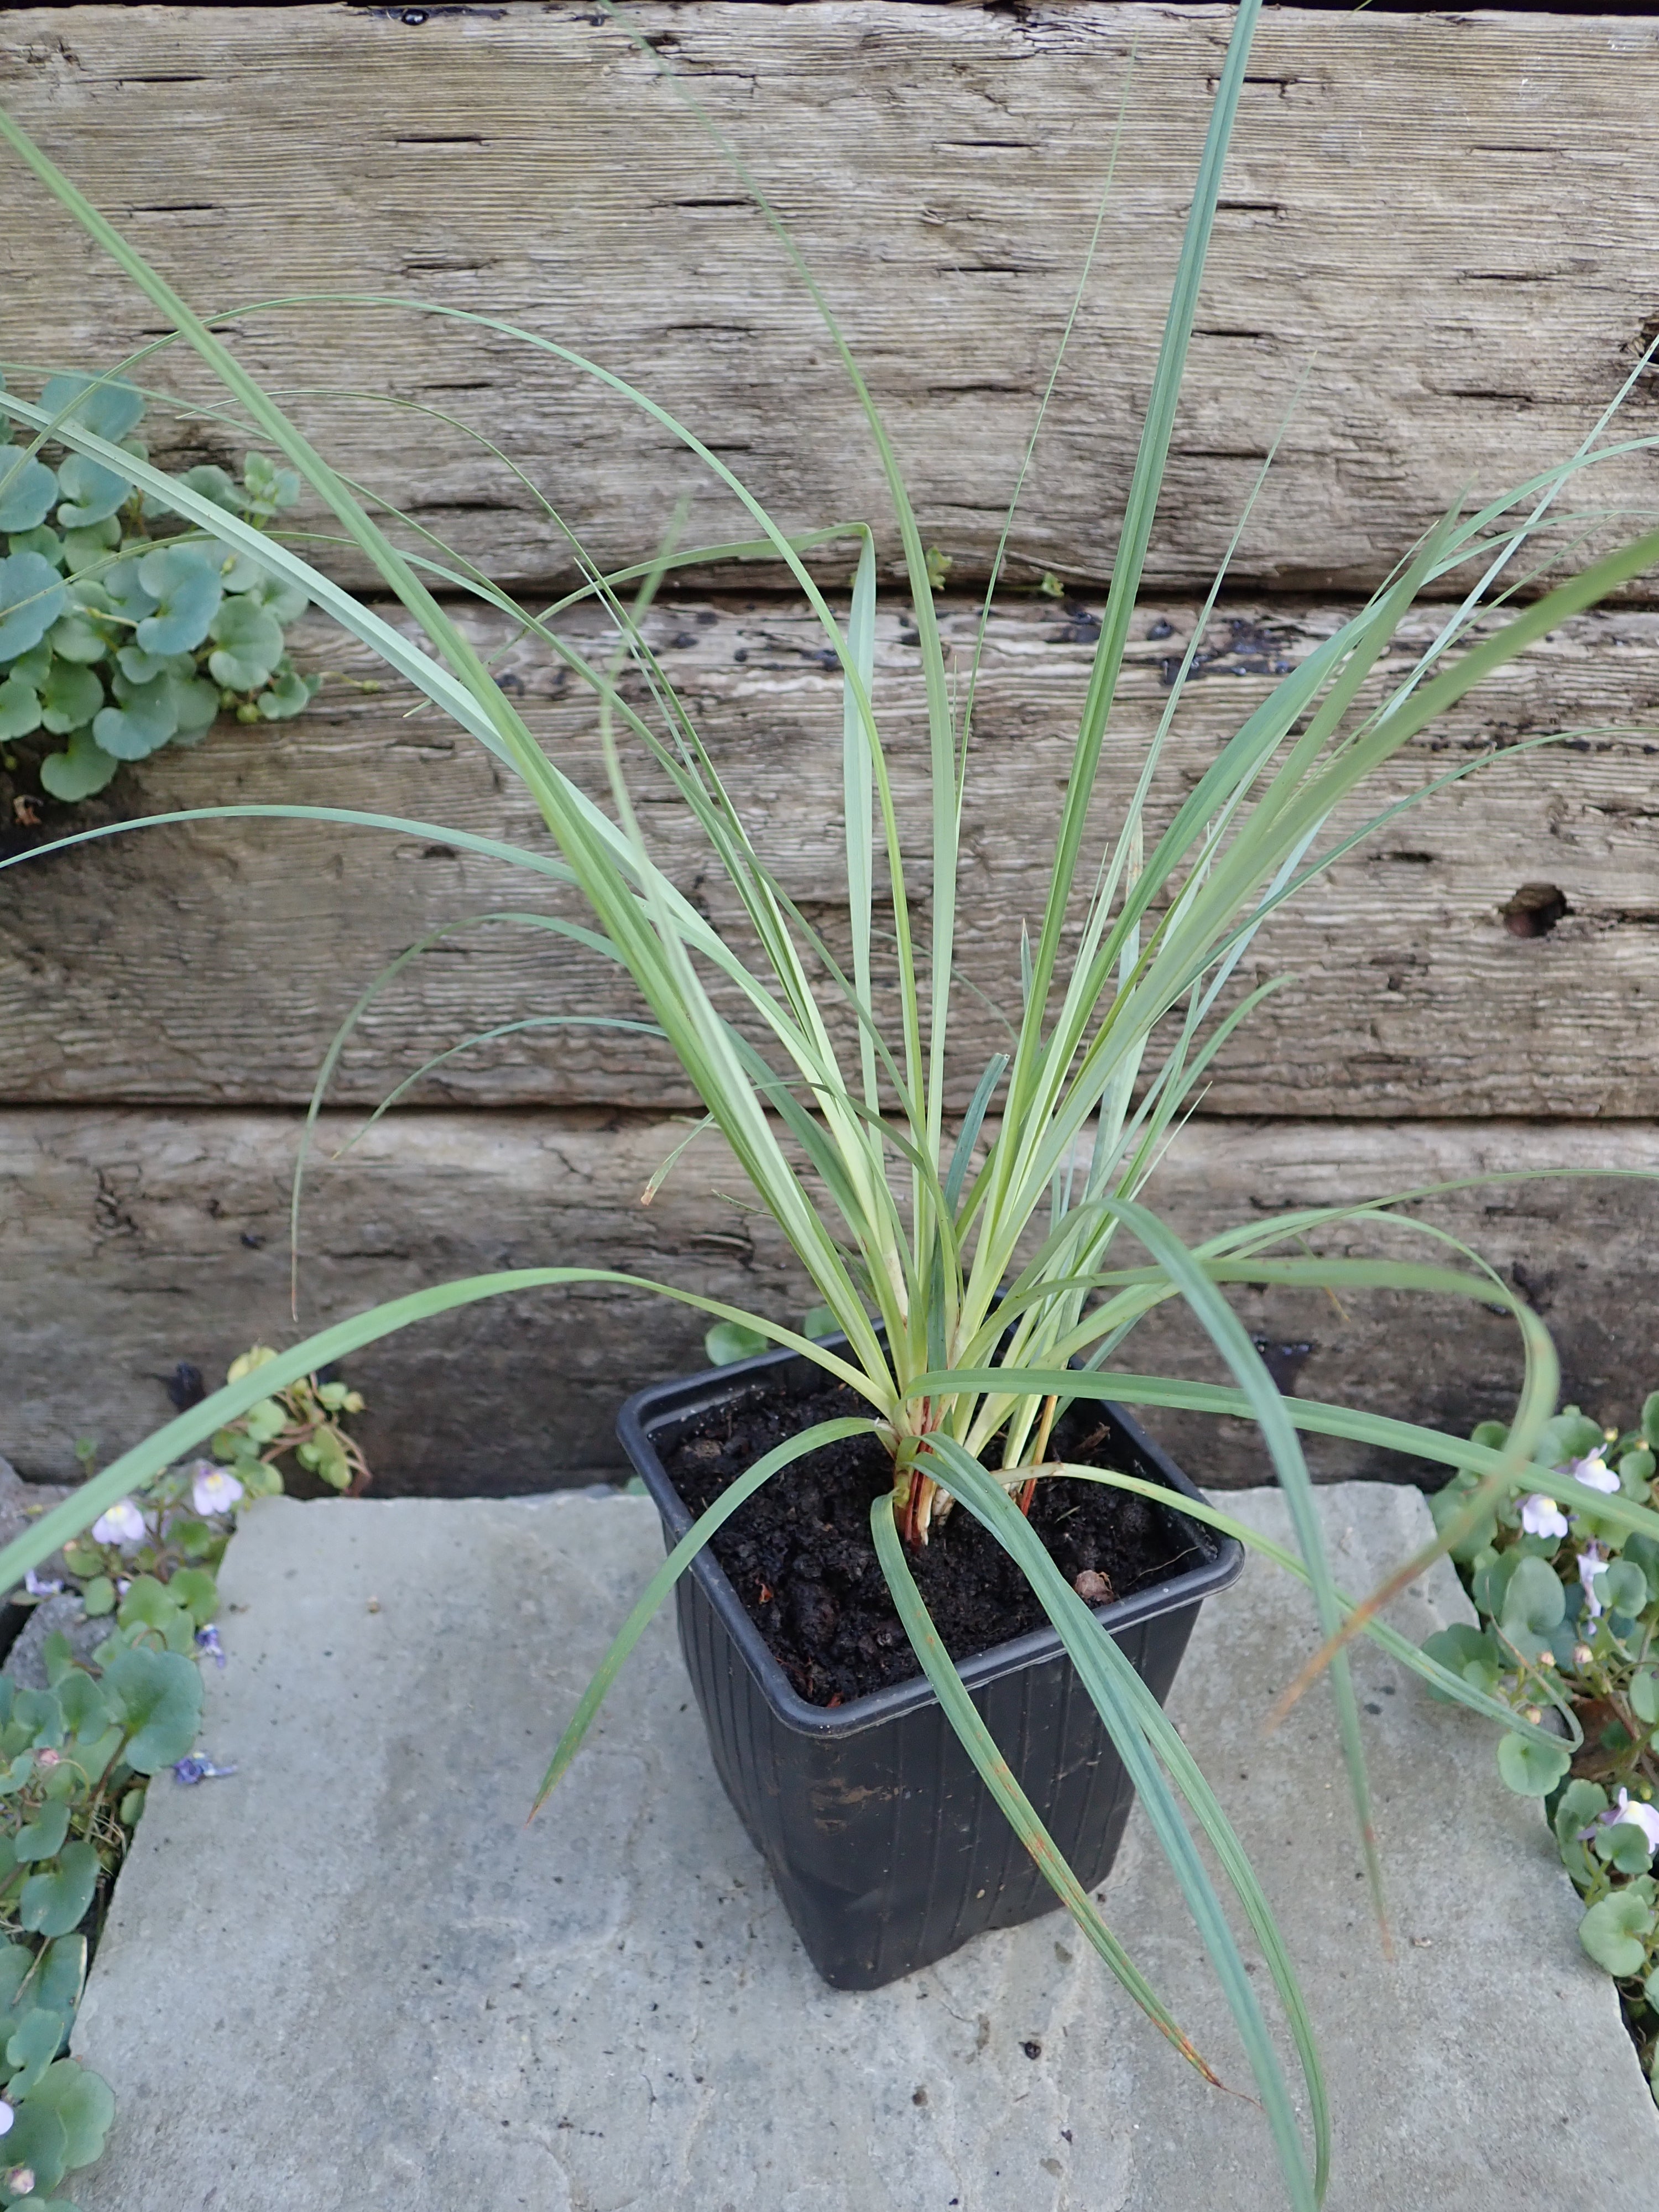 3 x Carex panicea Carnation sedge grass established bare root plants